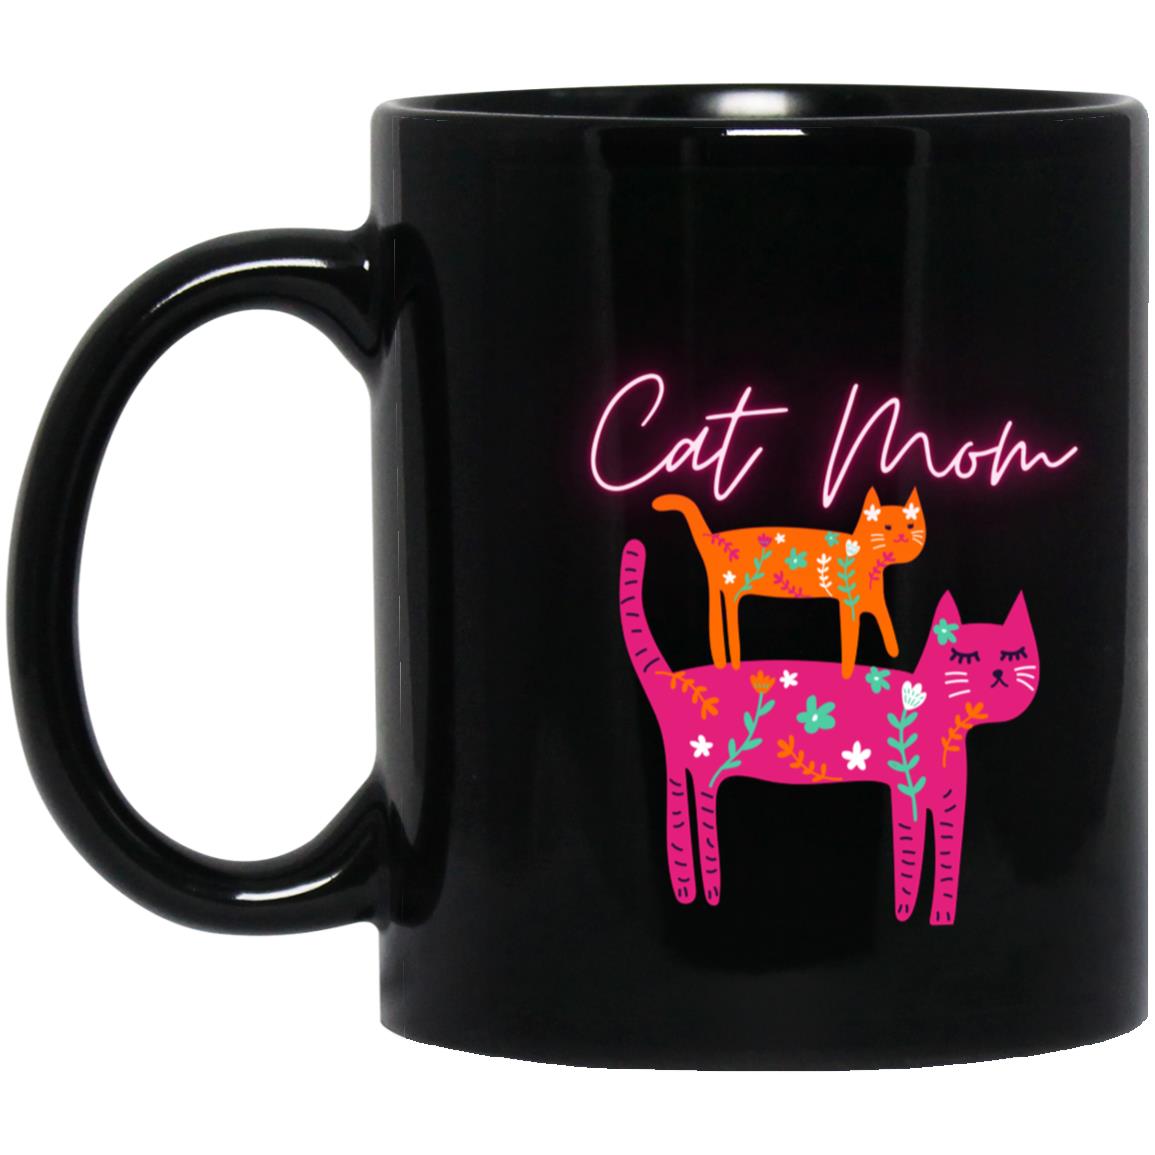 Cat Mom Ceramic Mug| For Mom| For Cat Lovers| For Best Friends| For Grandparents